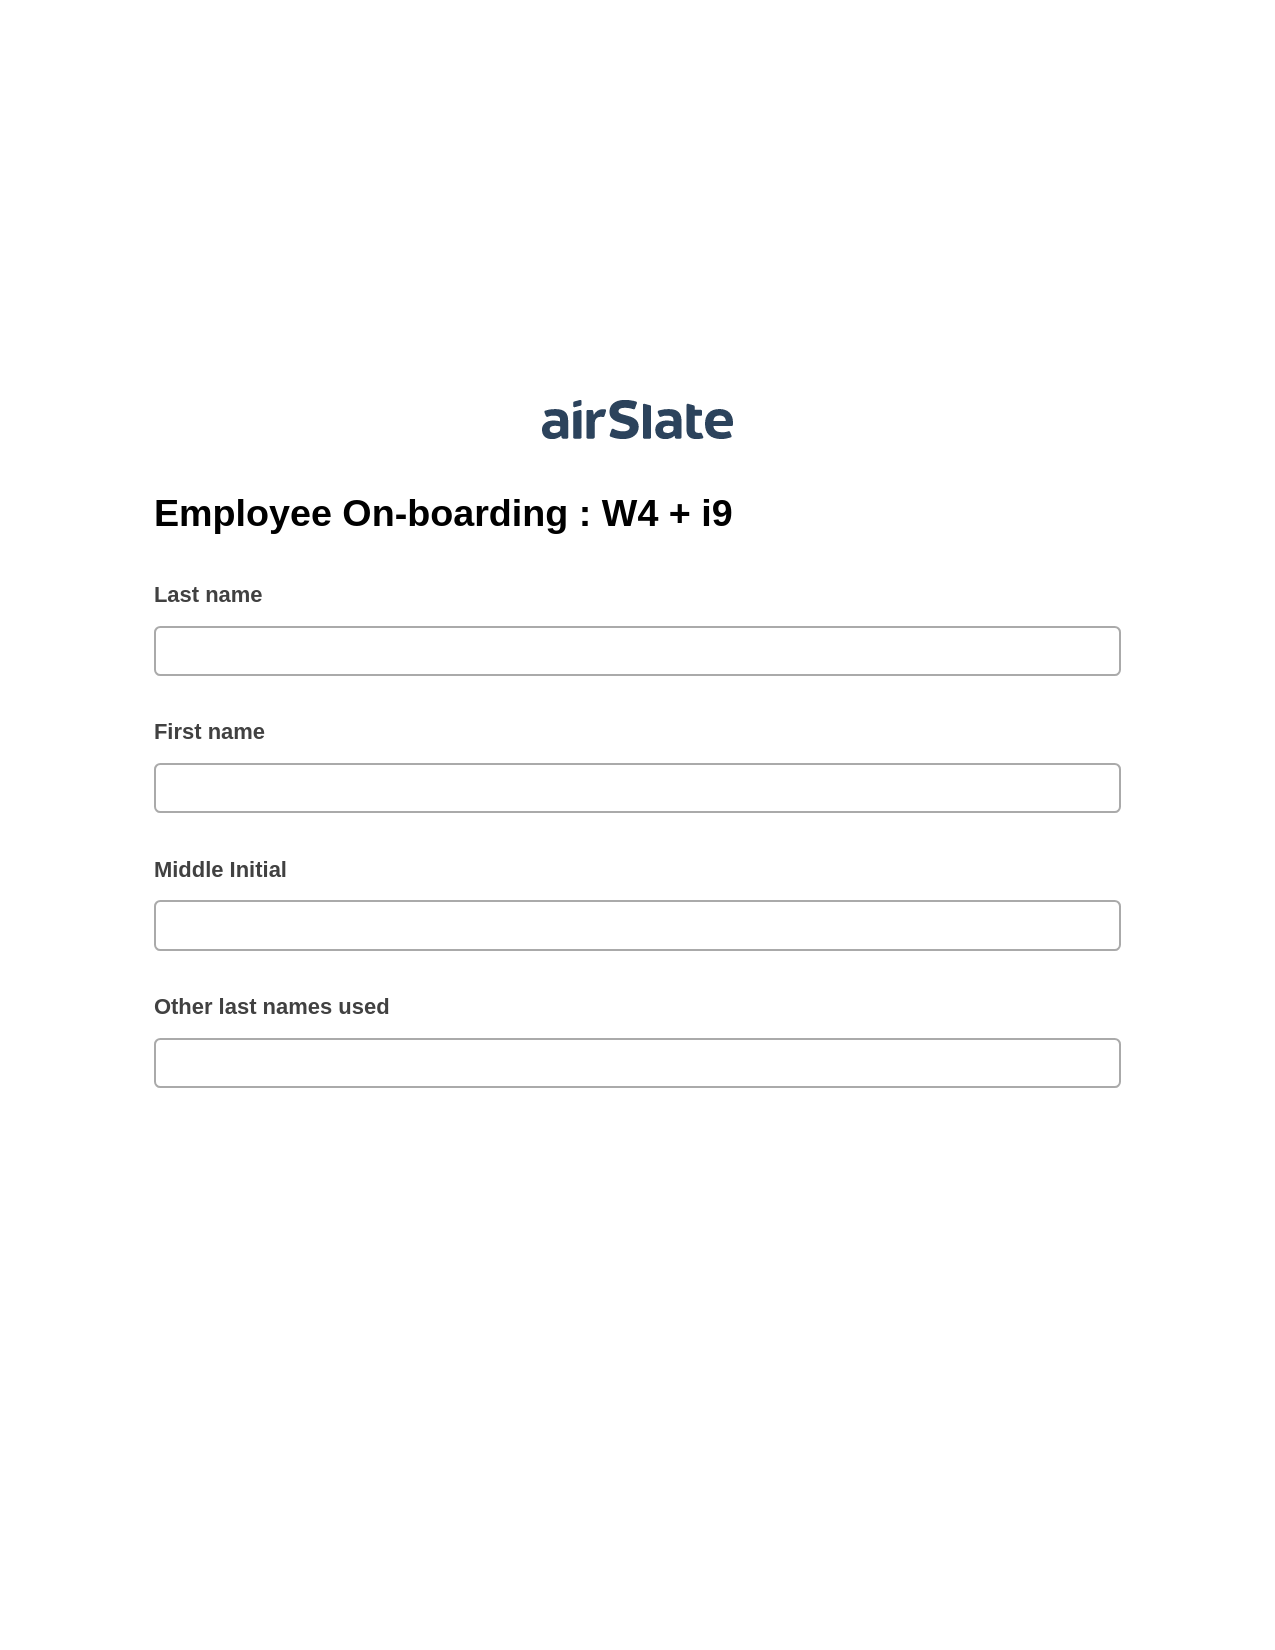 Employee On-boarding : W4 + i9 Pre-fill from Salesforce Records via SOQL Bot, Google Cloud Print Bot, OneDrive Bot